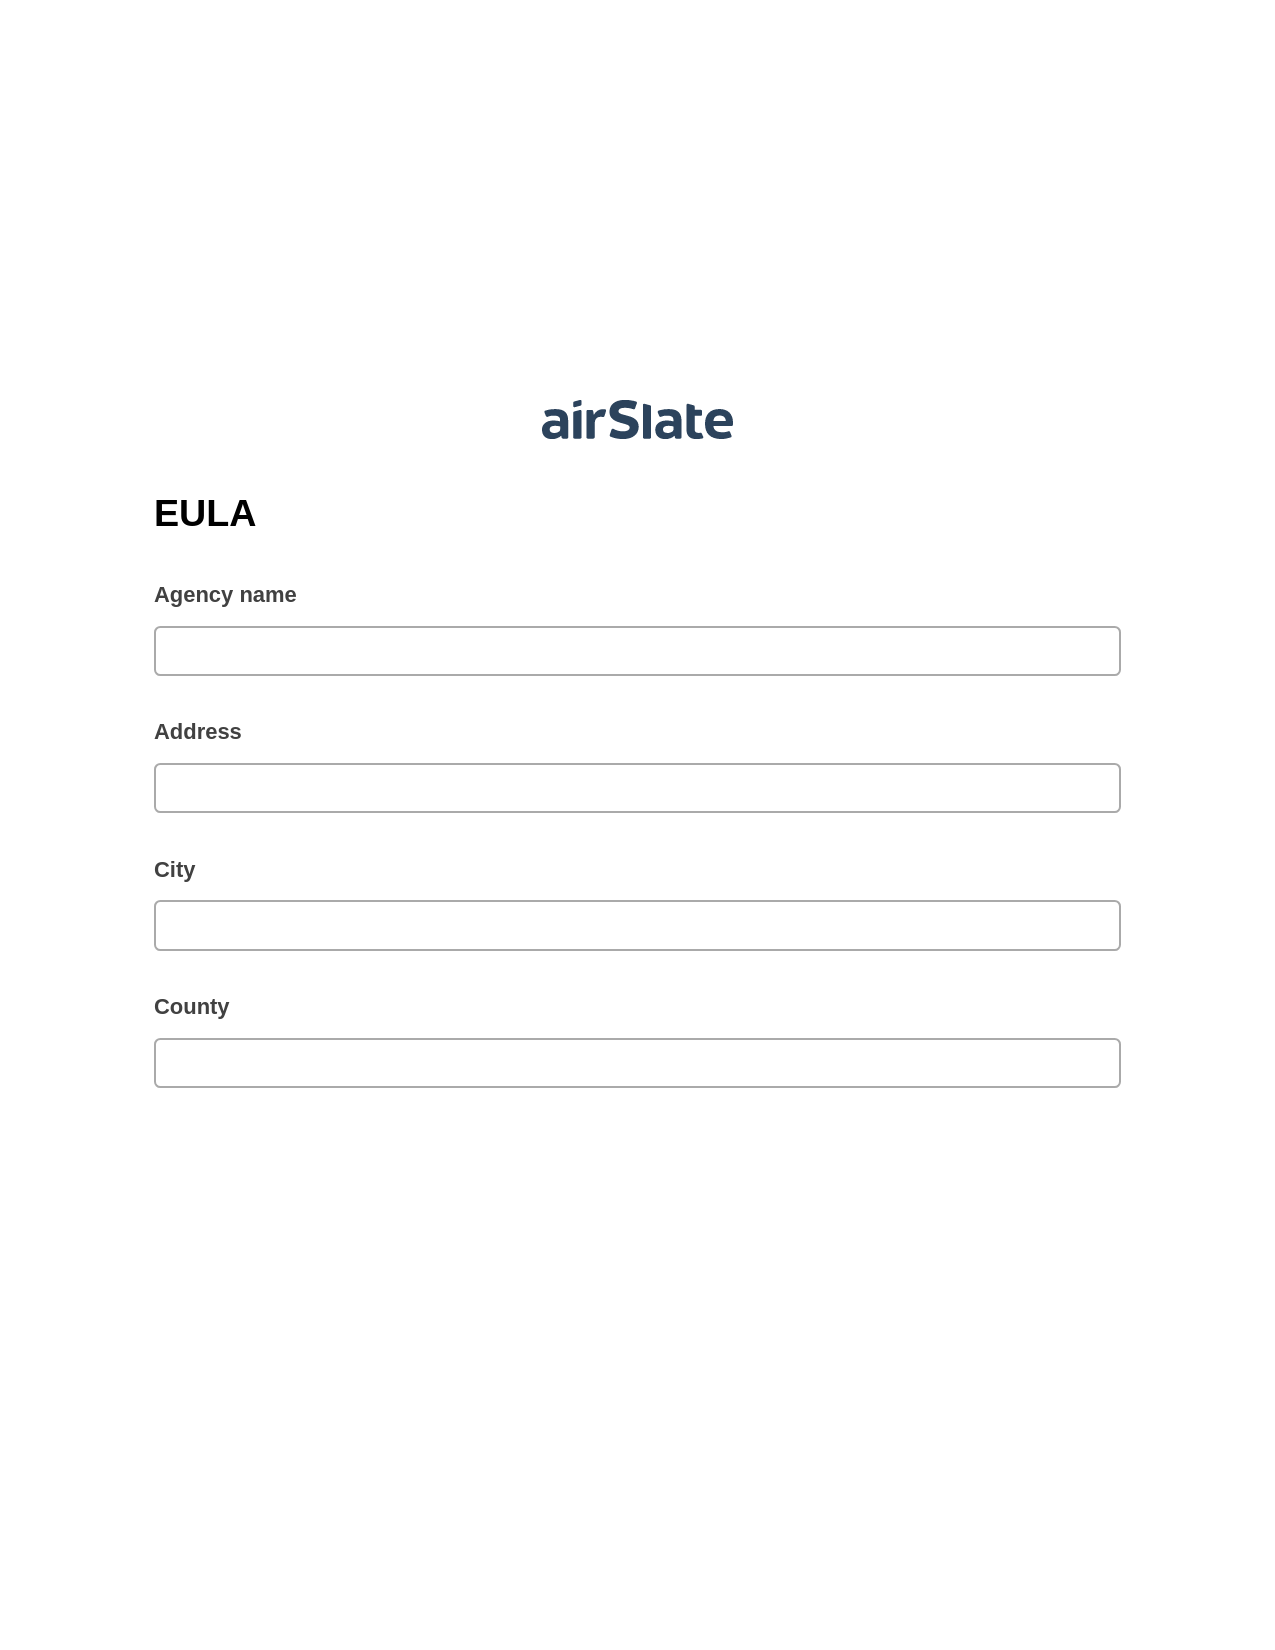 EULA Pre-fill from Excel Spreadsheet Dropdown Options Bot, Slack Notification Bot, Webhook Postfinish Bot